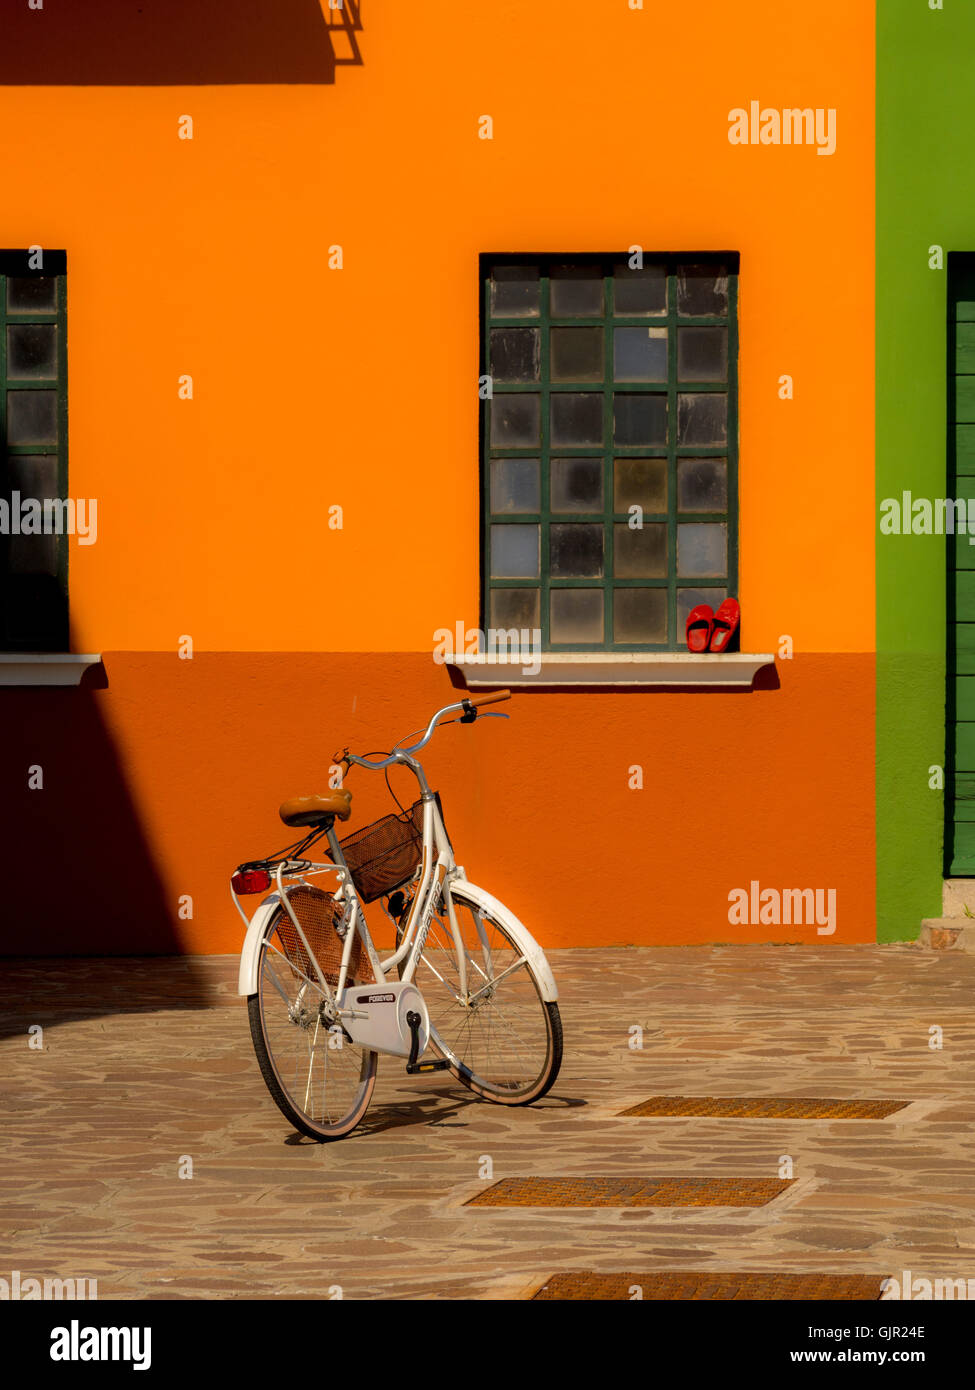 prisa Bien educado convertible Casa pintada de naranja fotografías e imágenes de alta resolución - Alamy